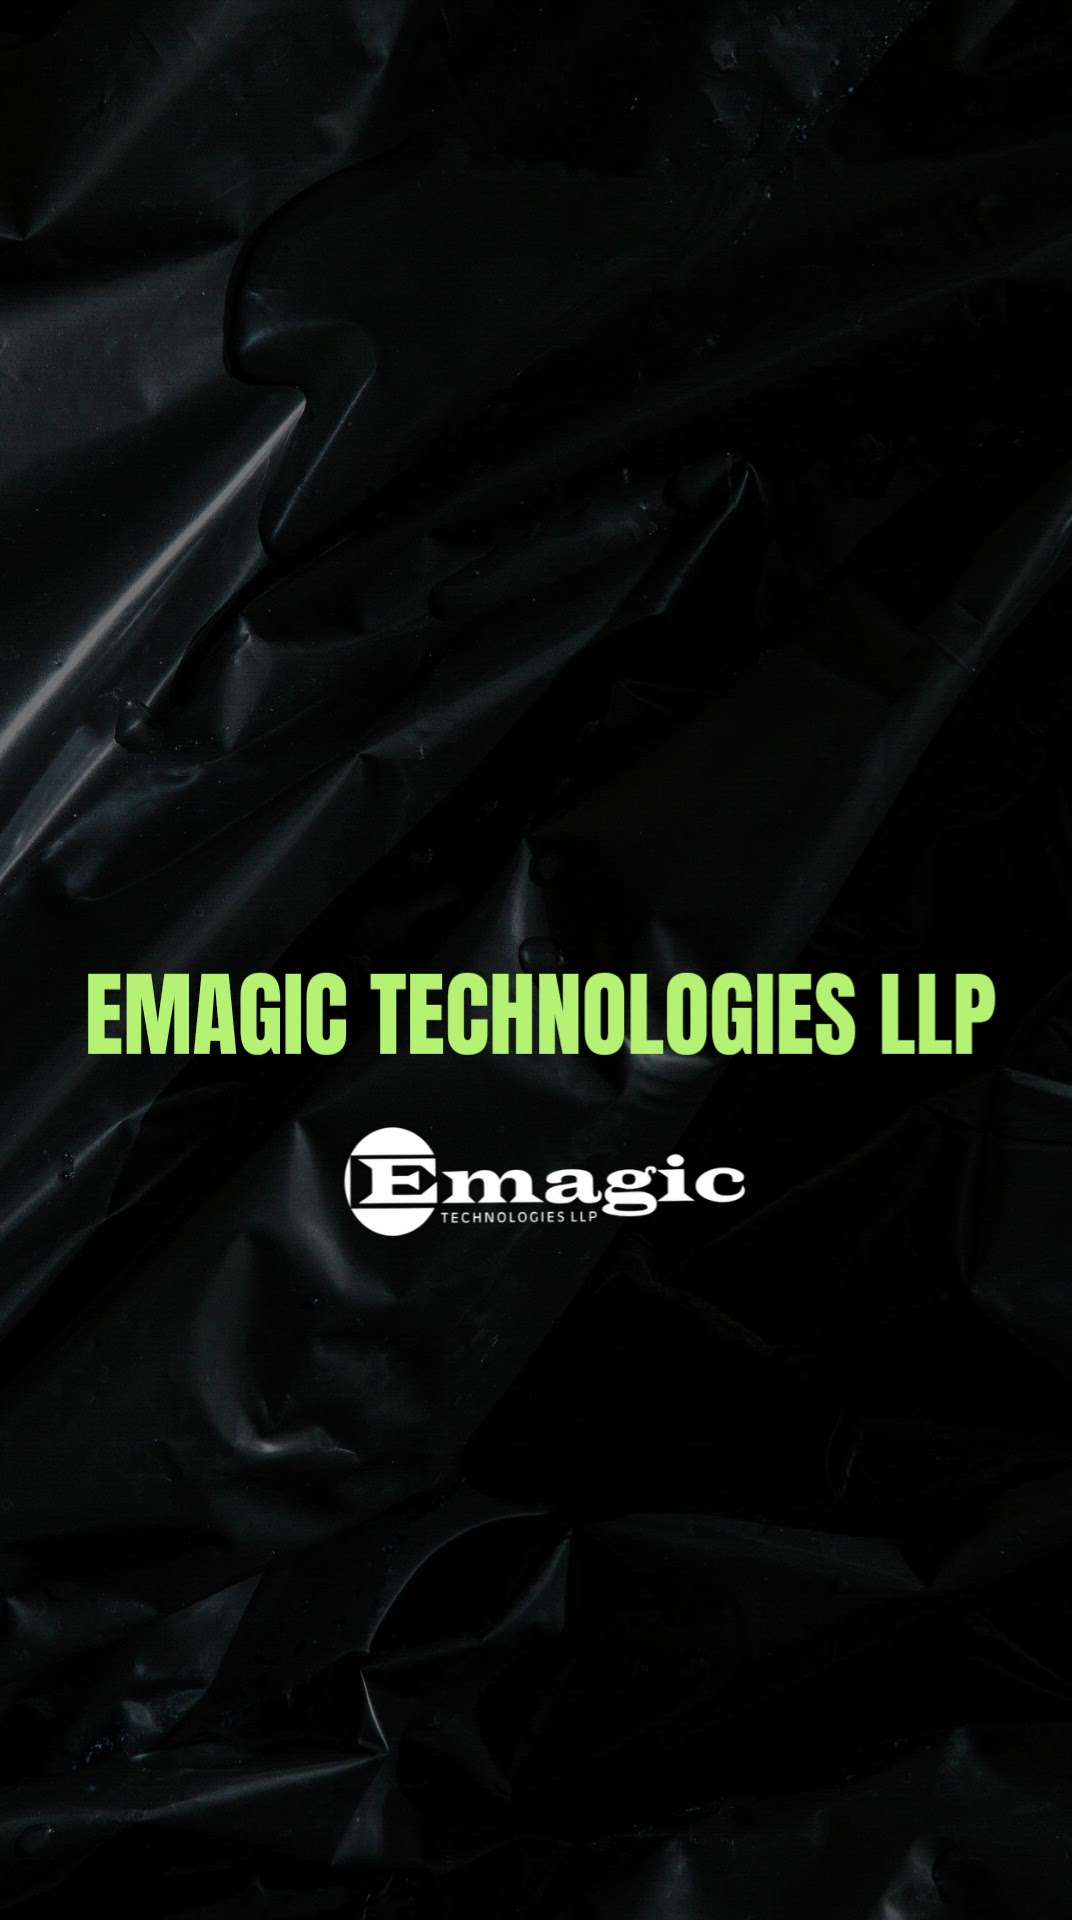 Success Celebration 🎉

#Team_emagic 
@emagic_technologies_llp